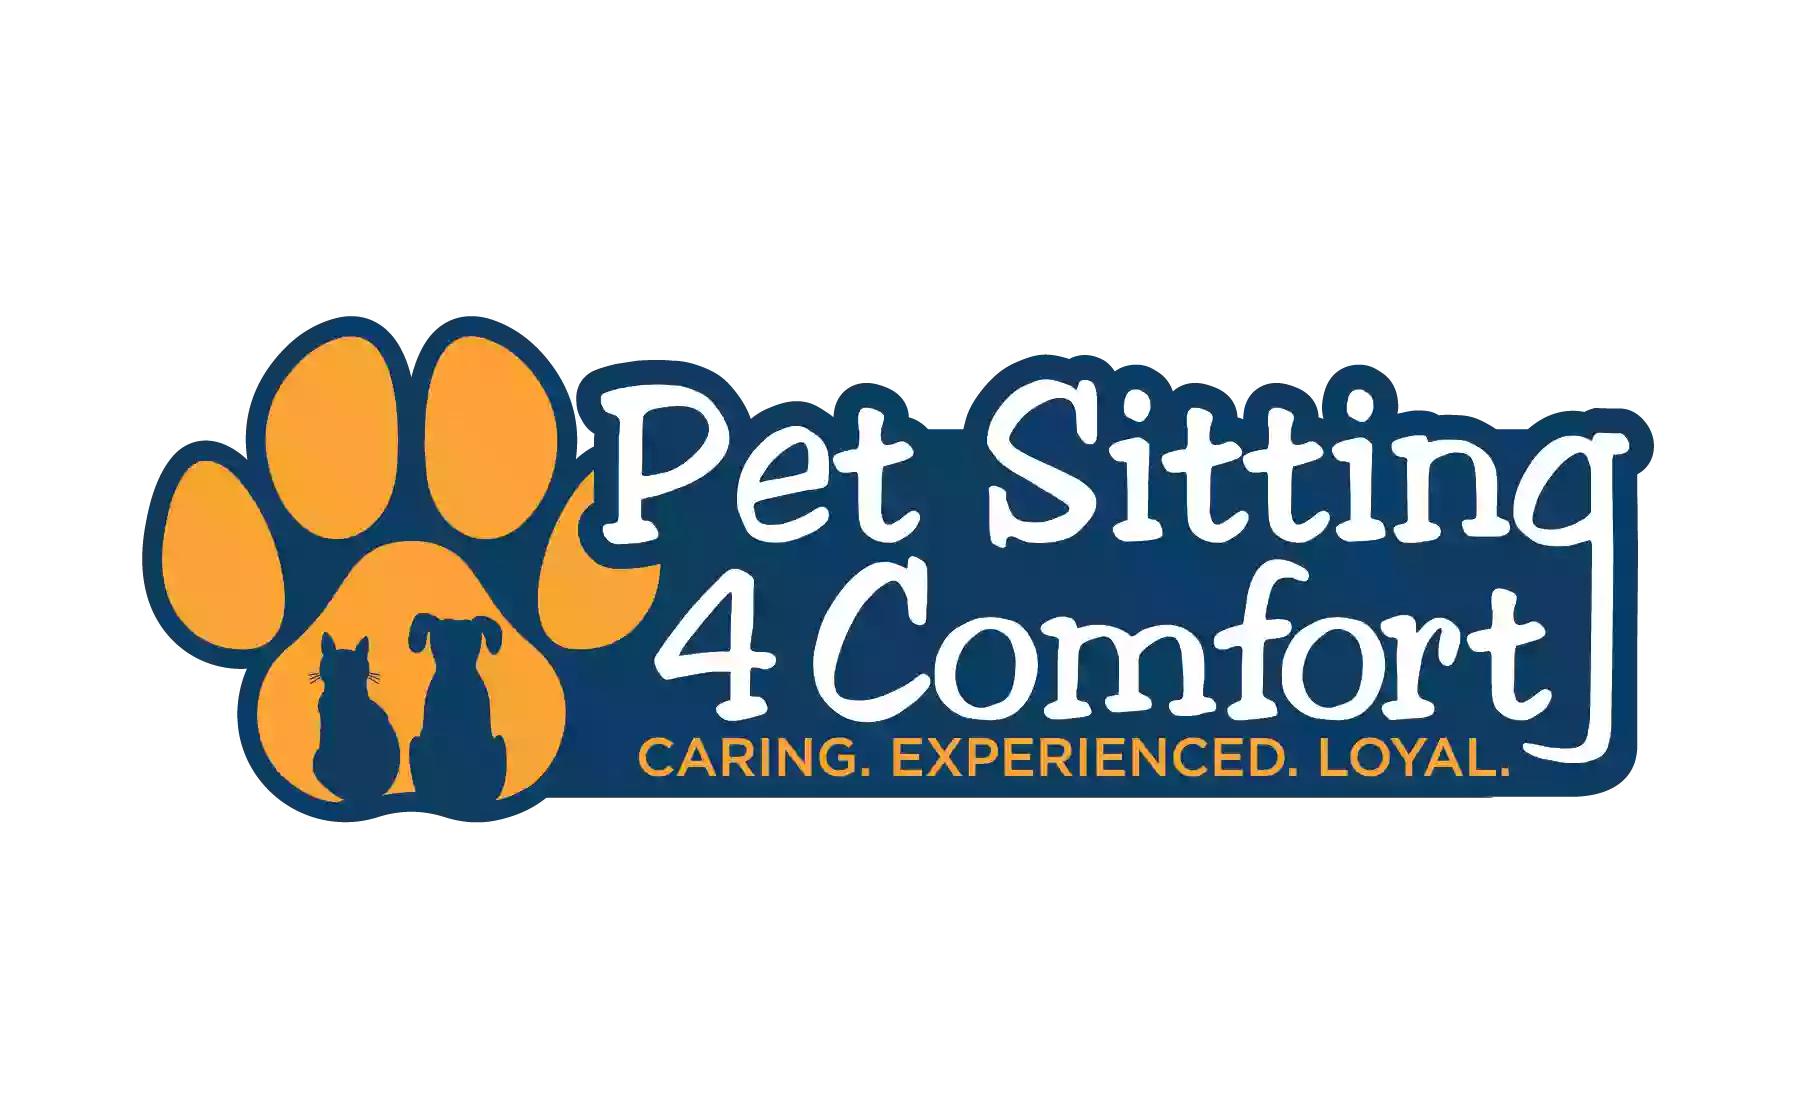 Pet Sitting 4 Comfort (PS4C), LLC